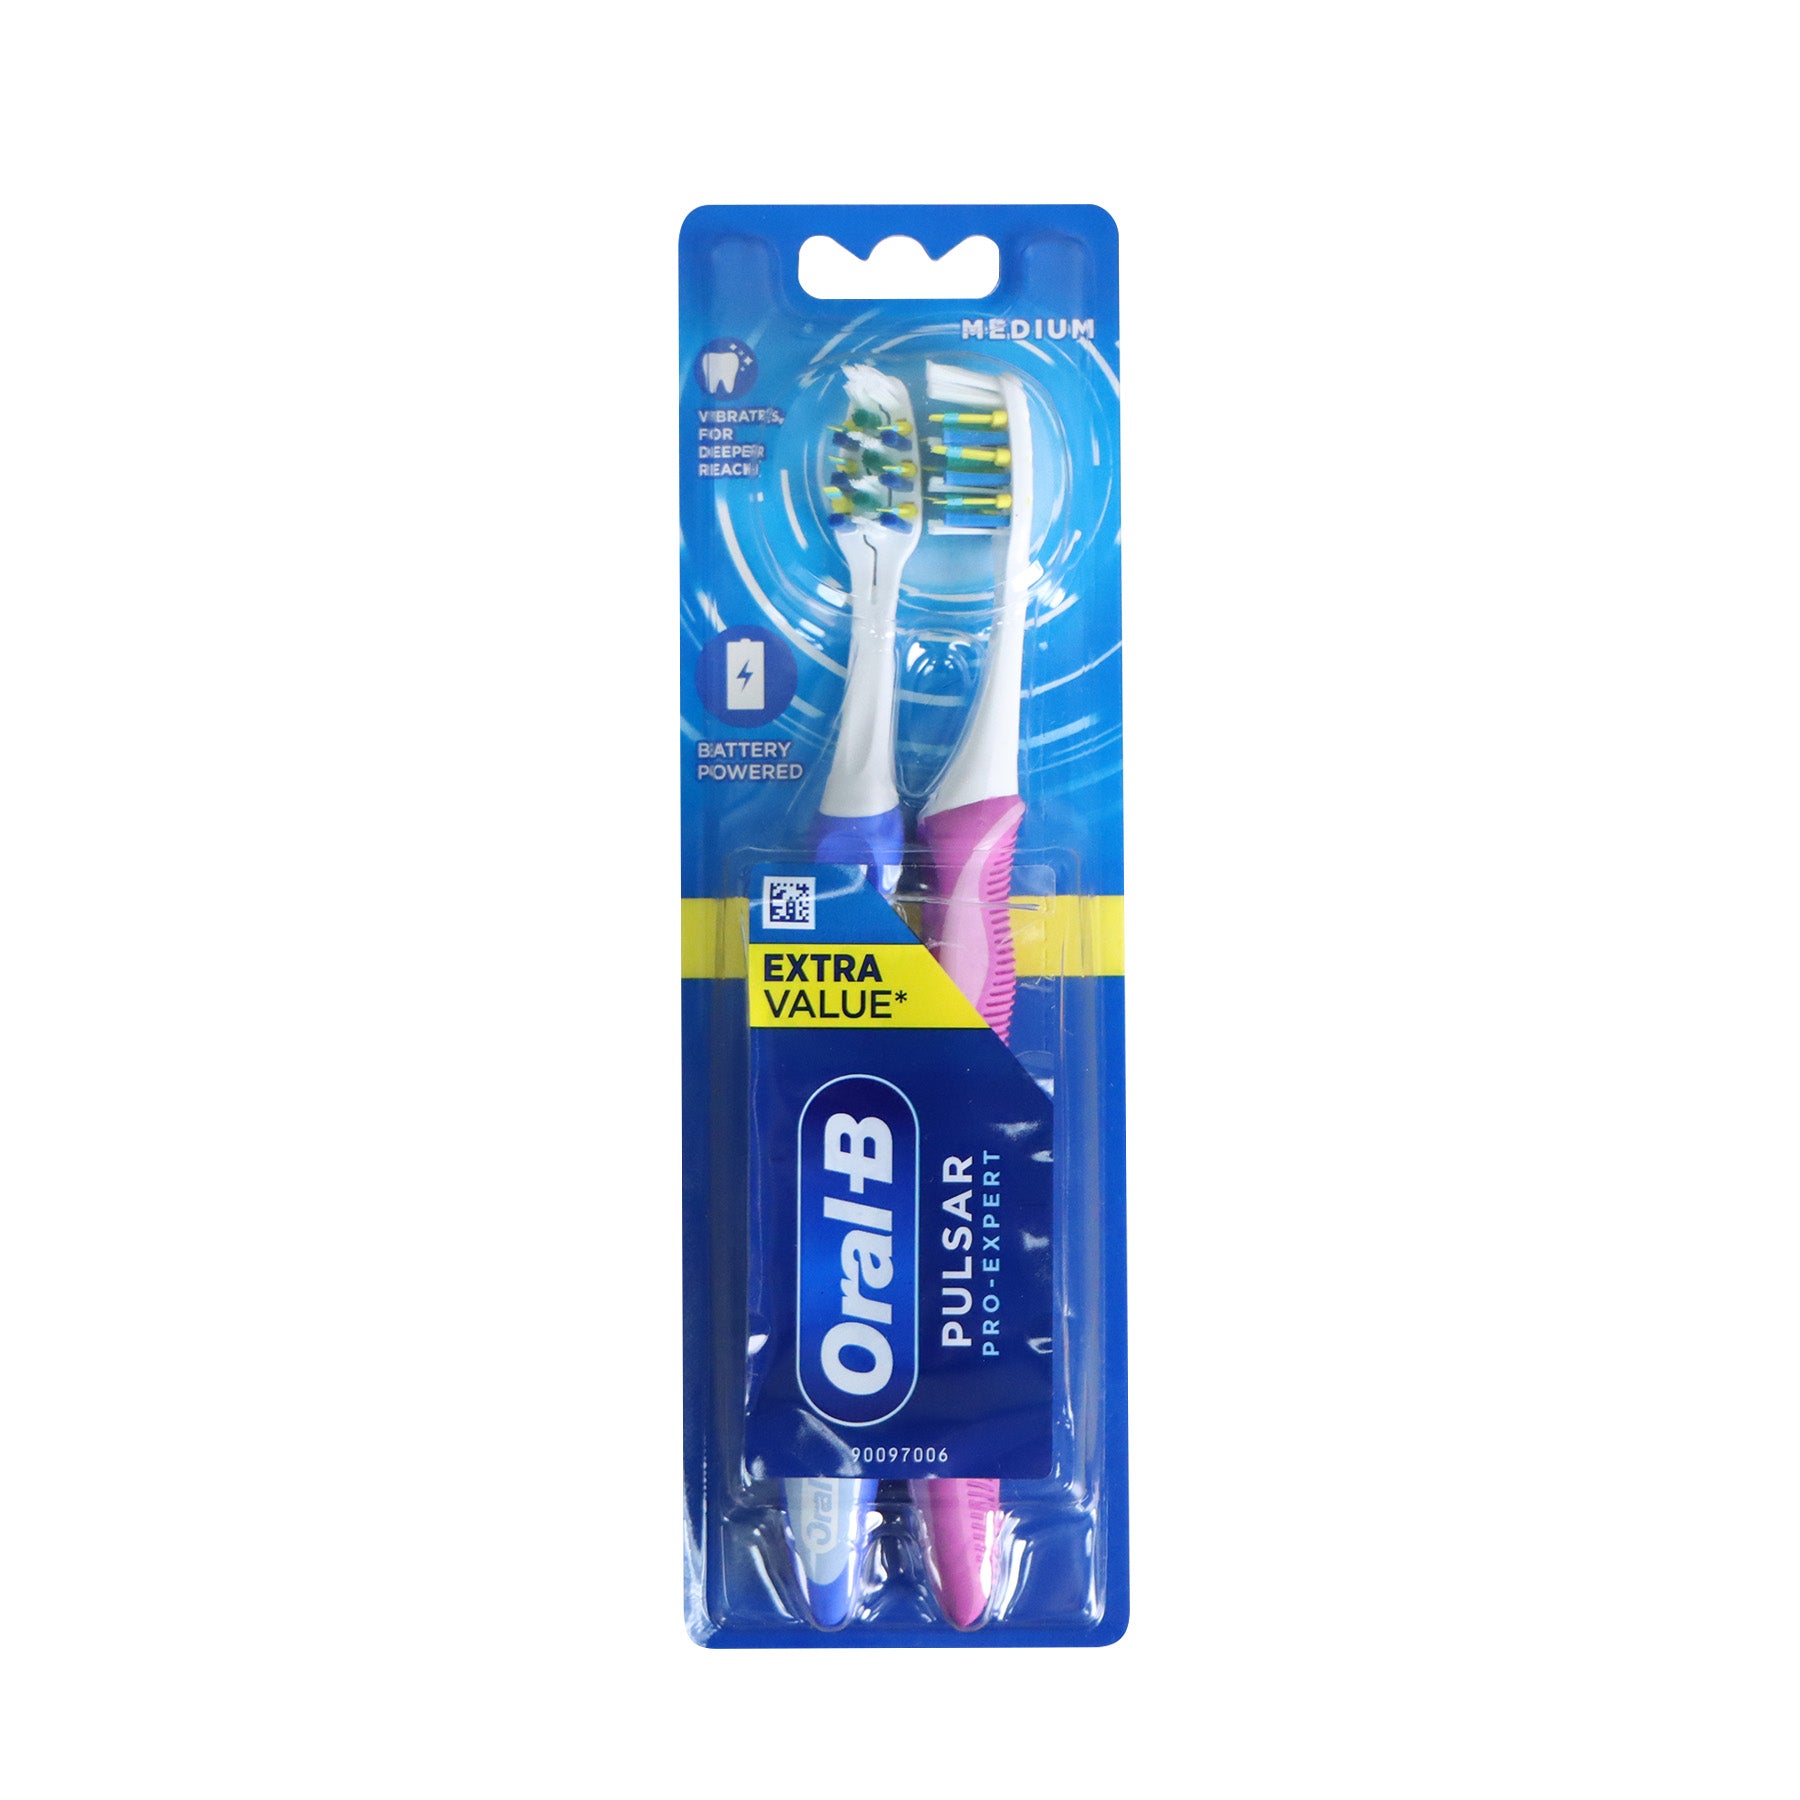 Oral-B Pulsar Pro-Expert Toothbrush (Blue & Purple)